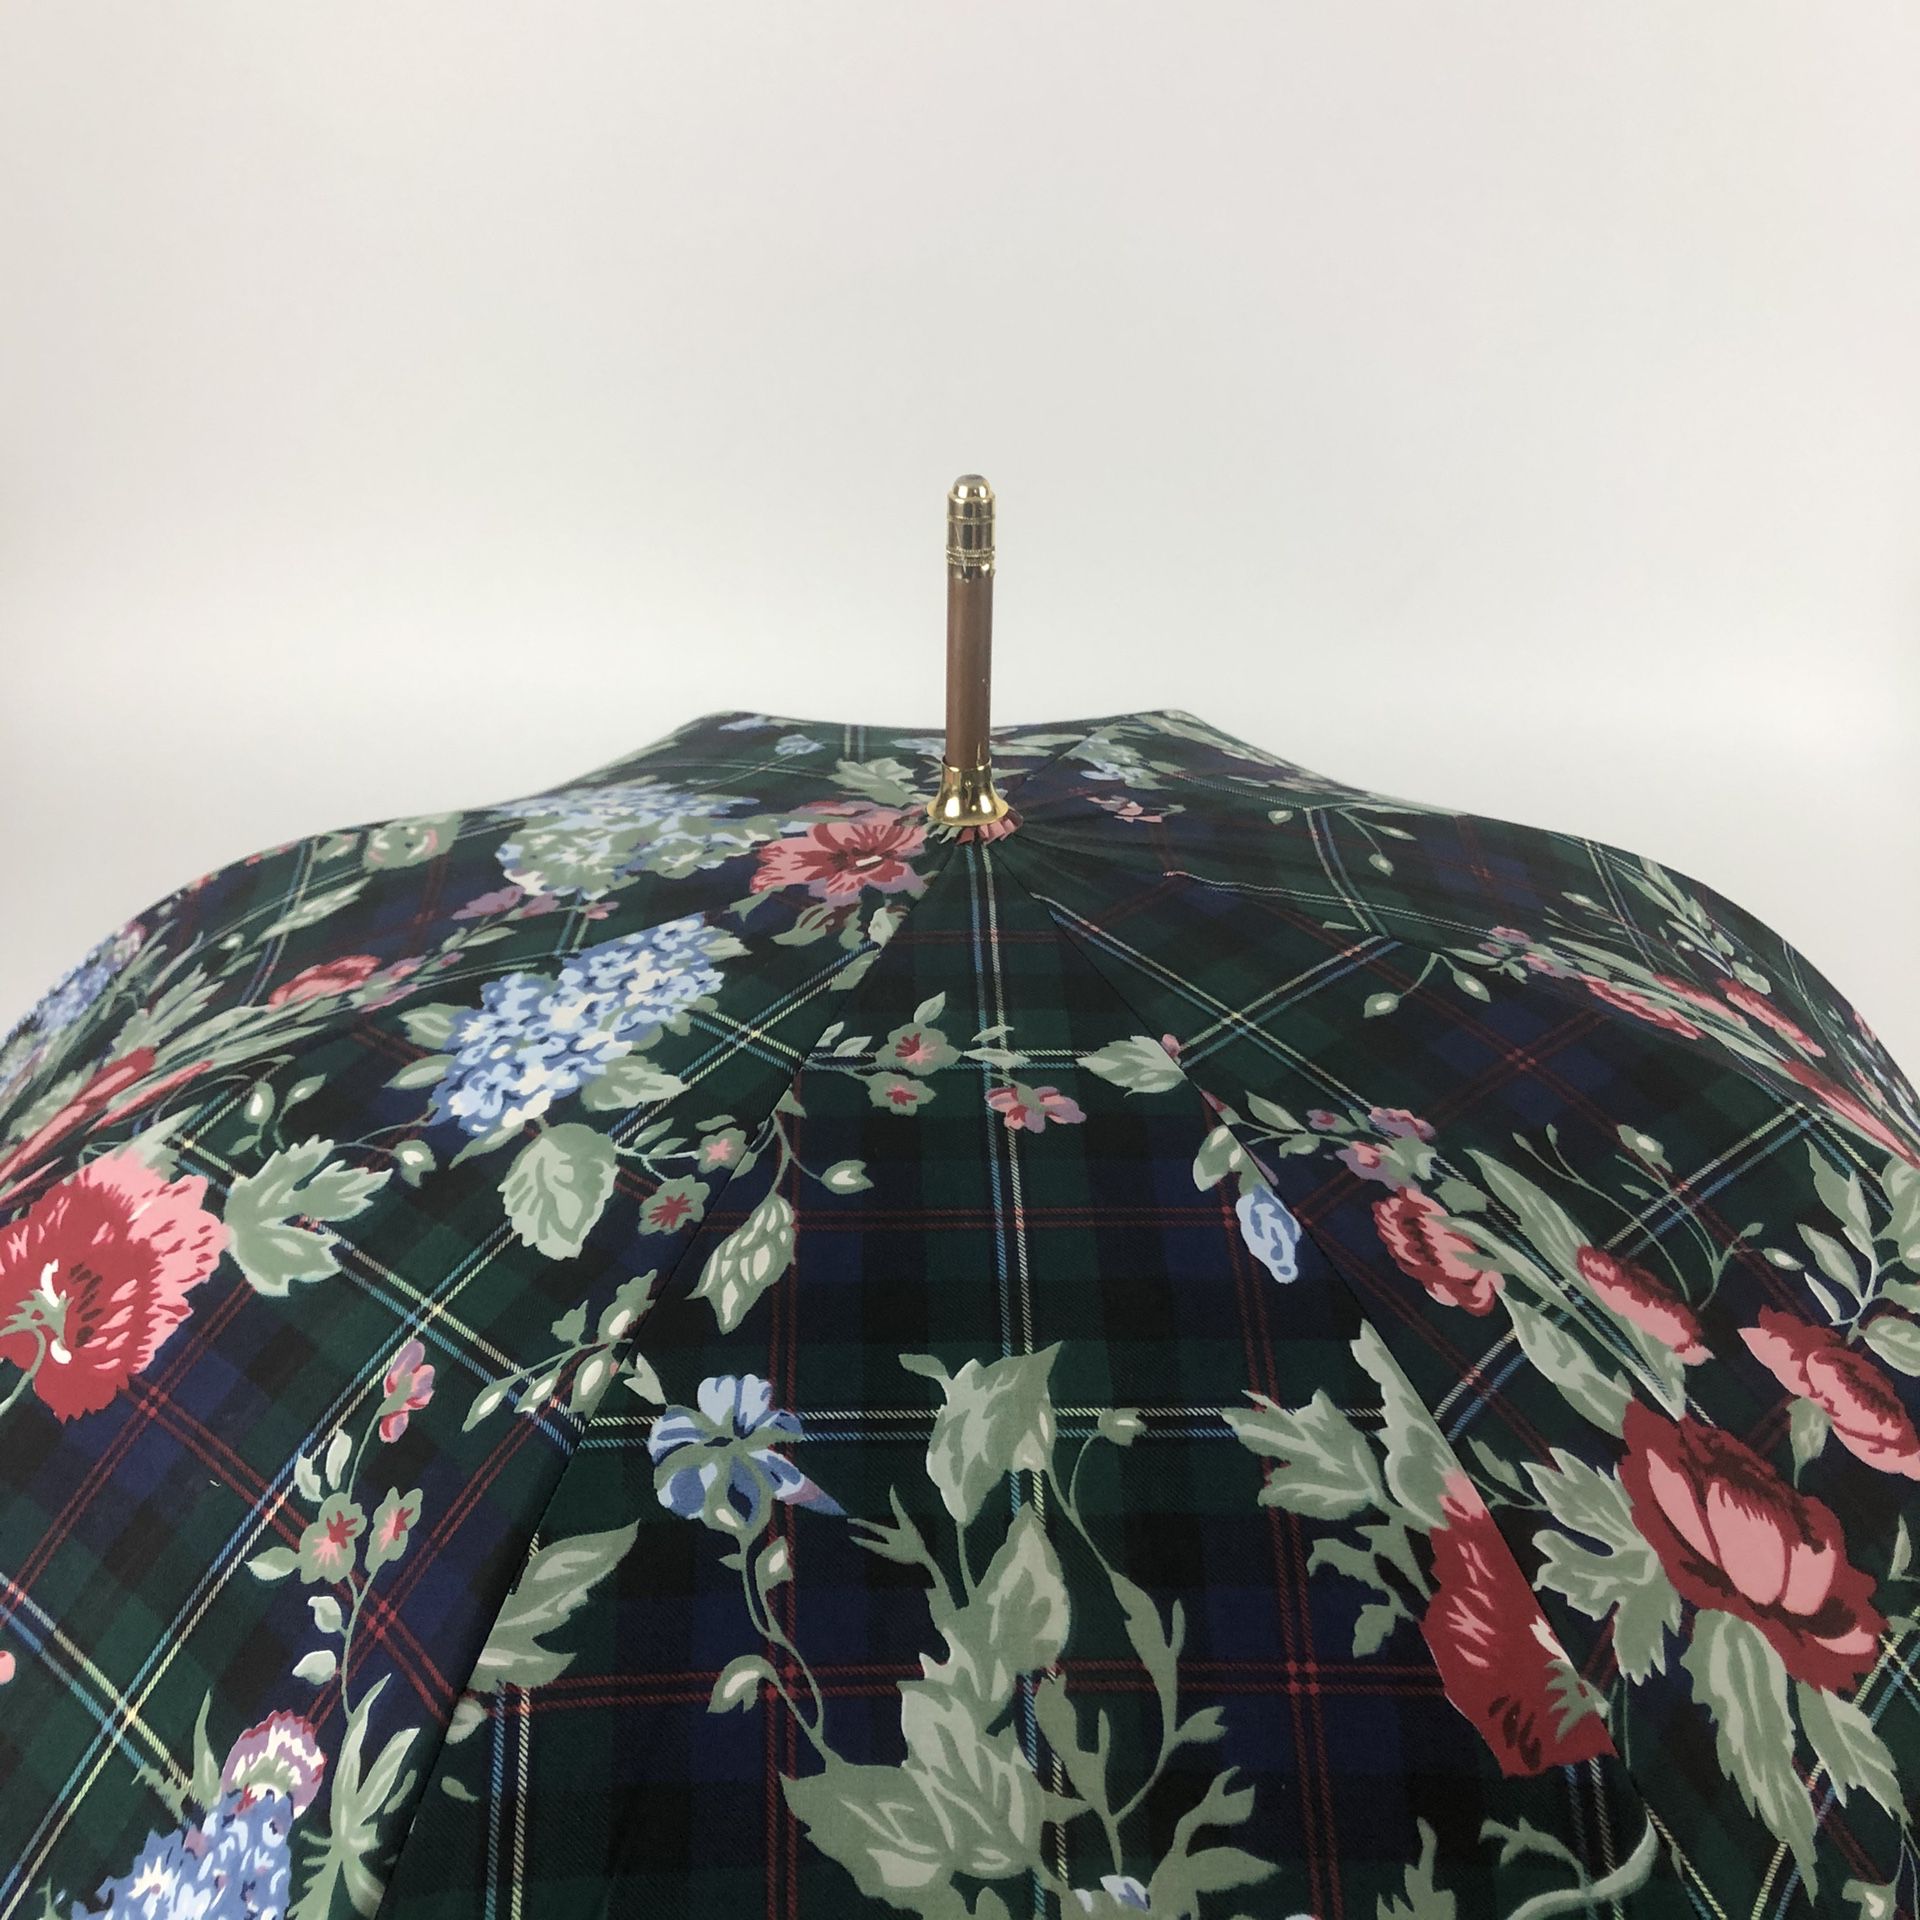 Vintage Umbrella for Sale in North Las Vegas, NV - OfferUp